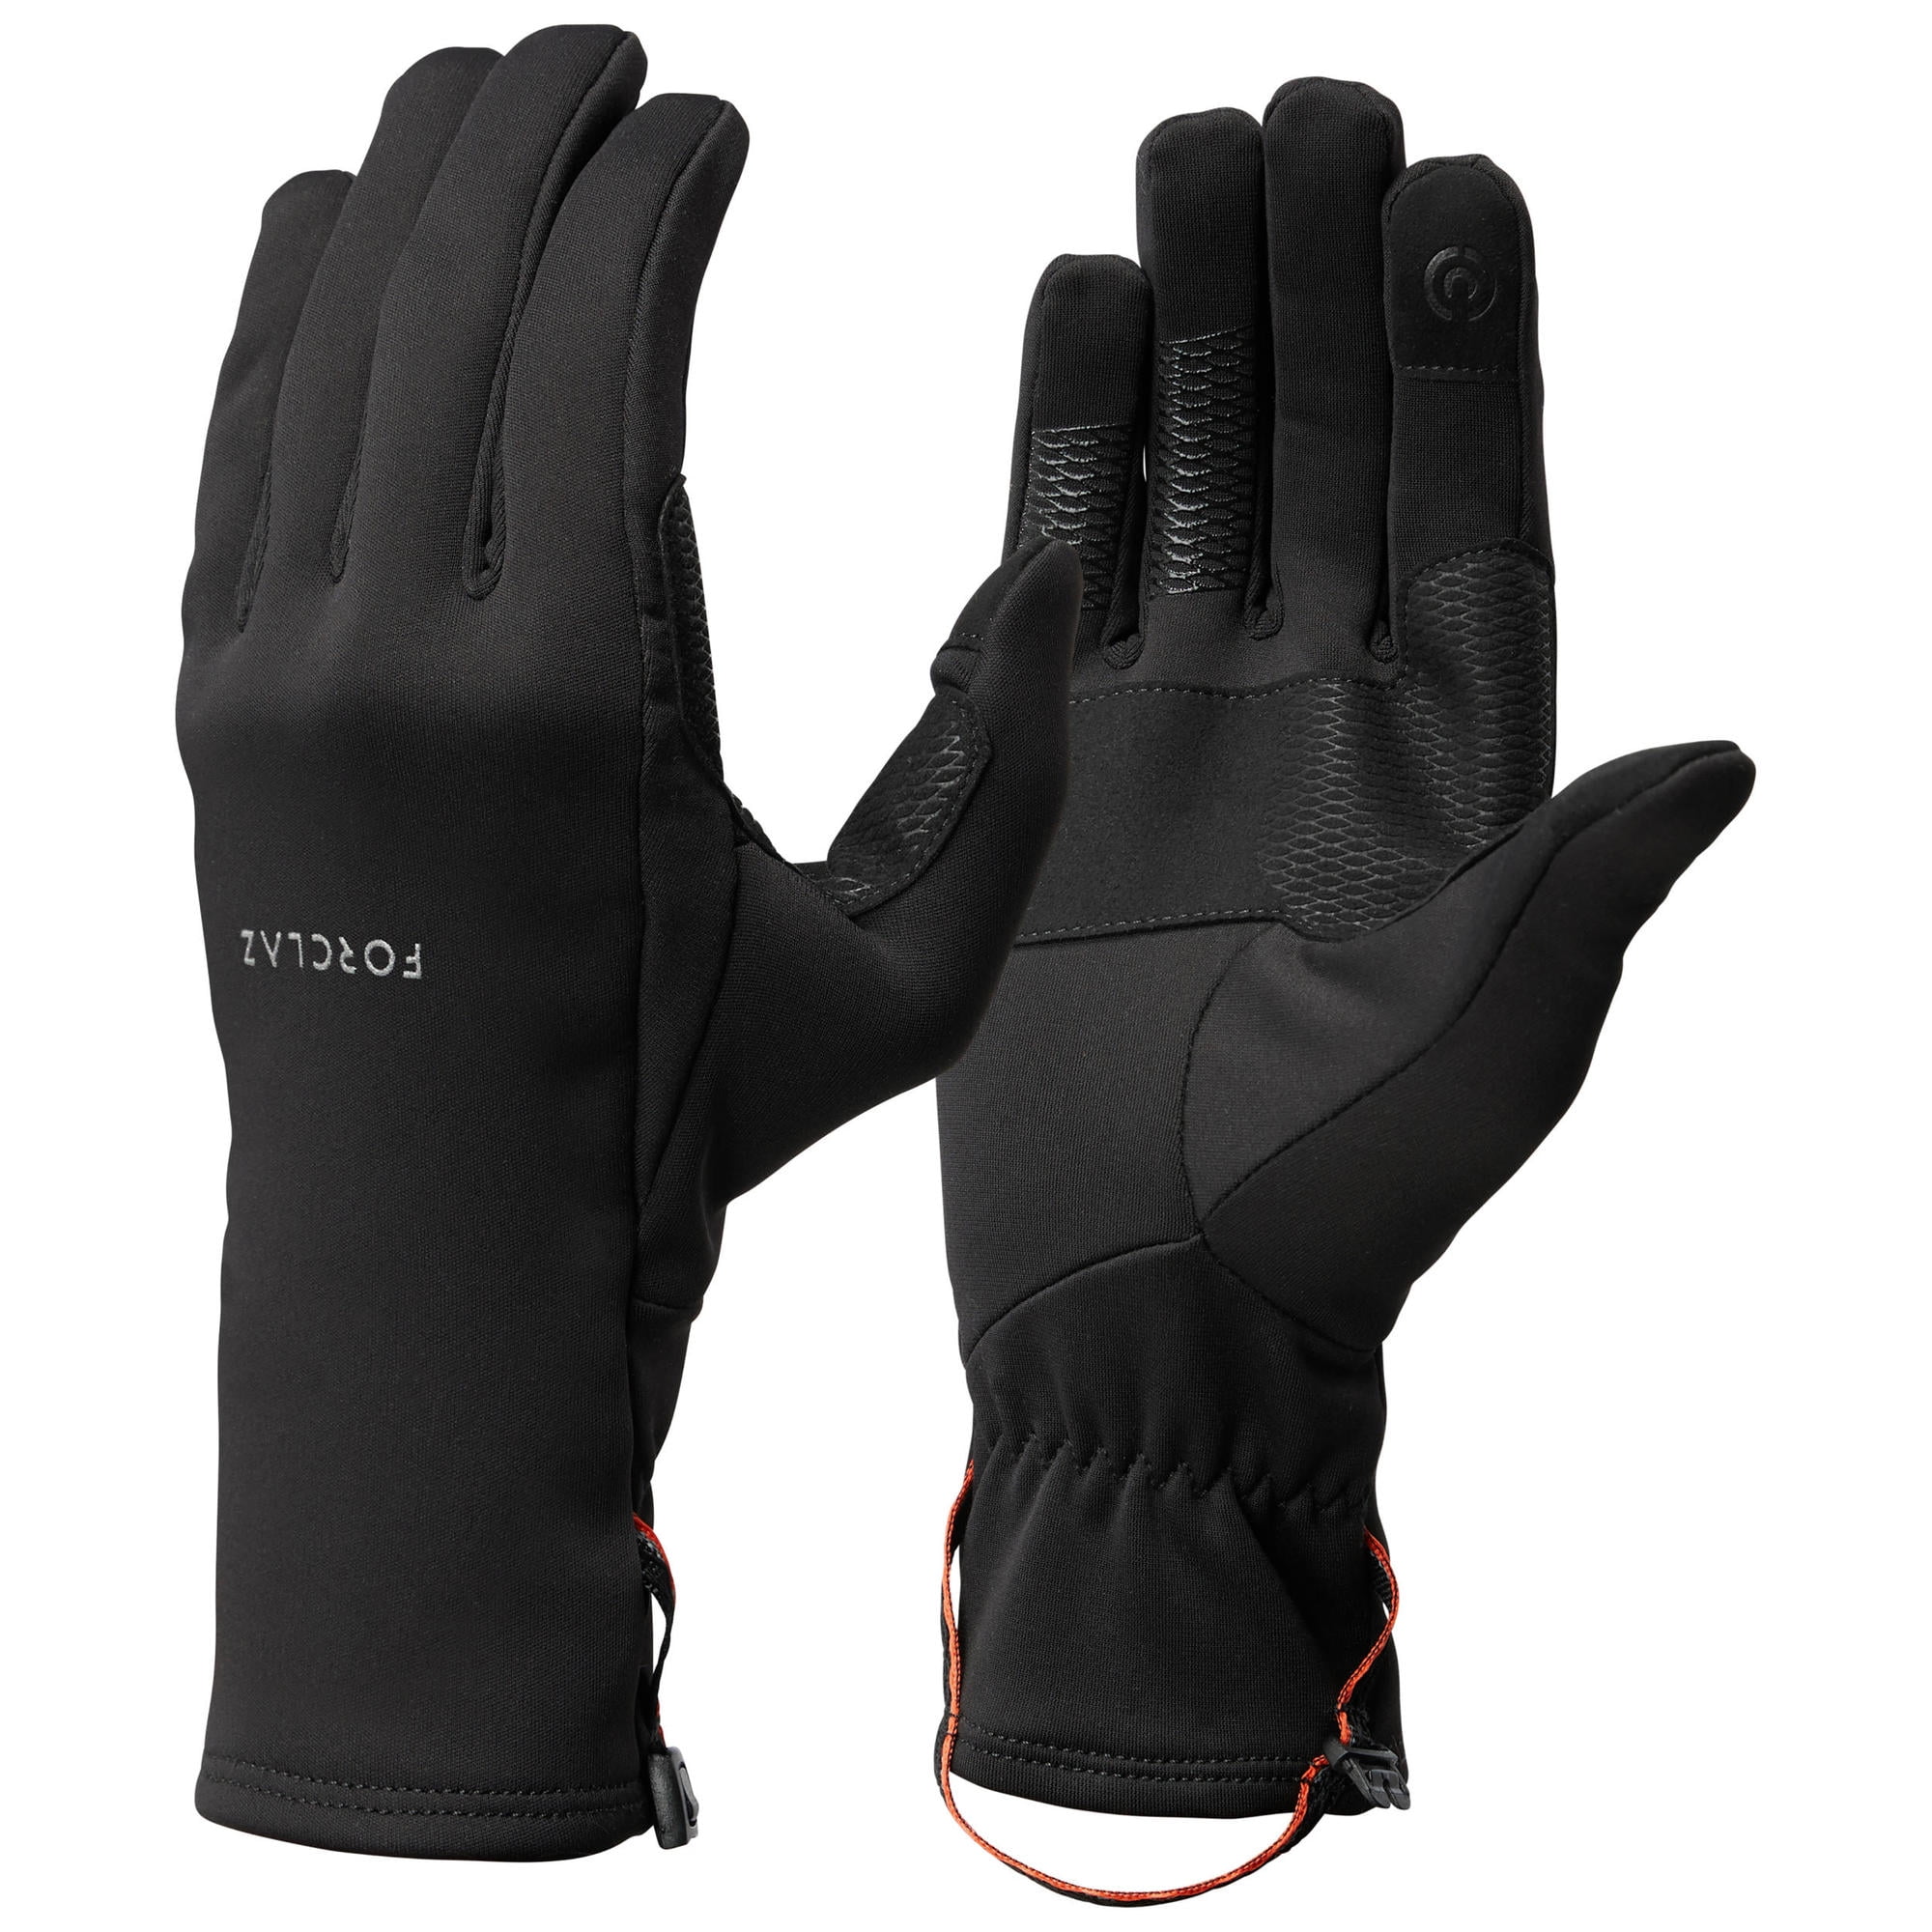 Striker Tough Skin Palm Protector Gloves/Protection against Blister Vibration 